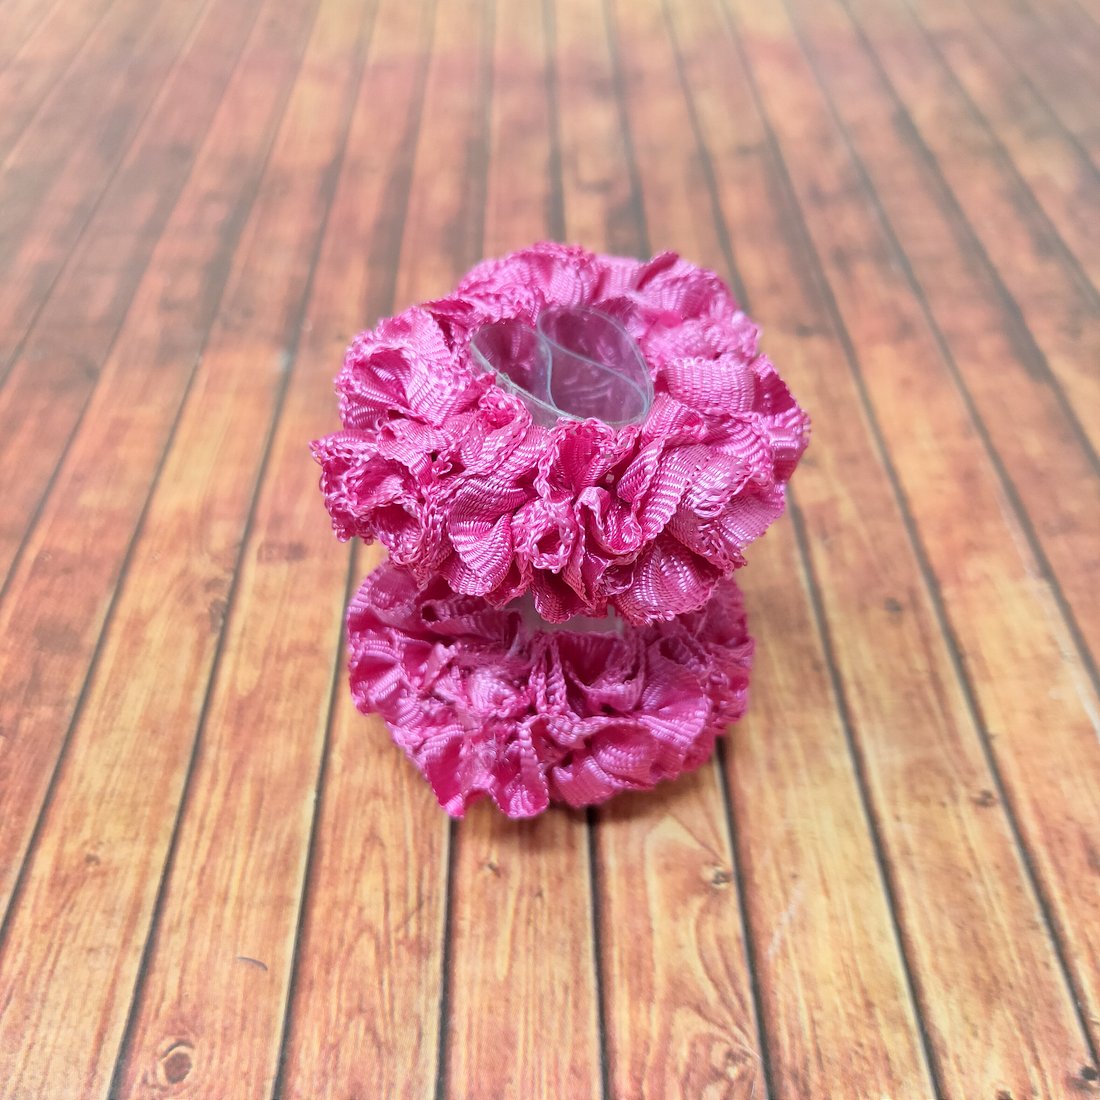 Anokhi Ada Pink Fabric small Scrunchie for Girls and Women (15-20 Scrunchie, 2 Pcs)